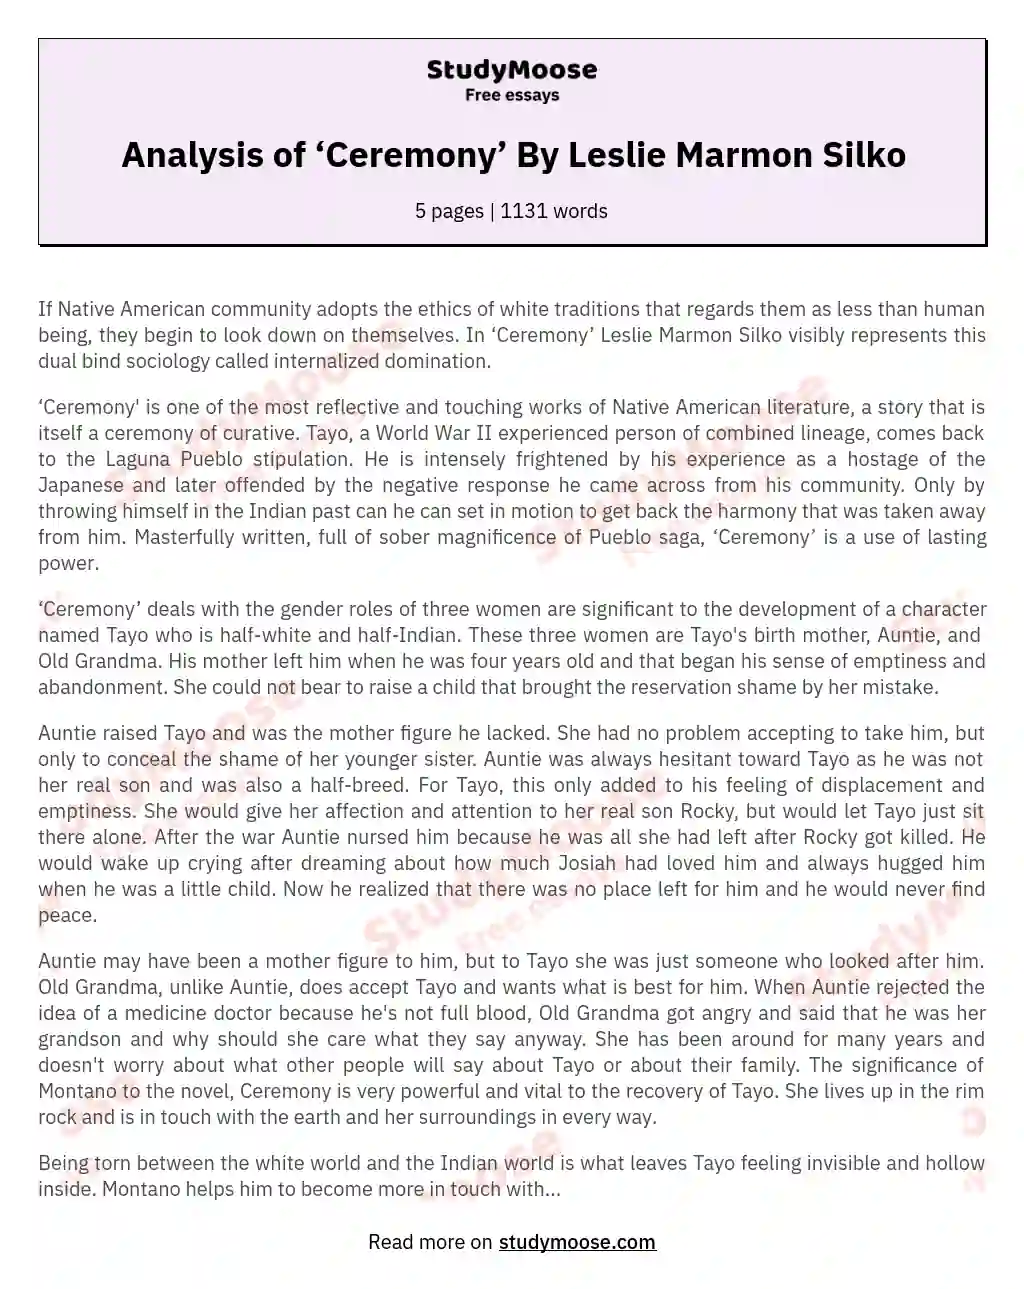 Analysis of ‘Ceremony’ By Leslie Marmon Silko